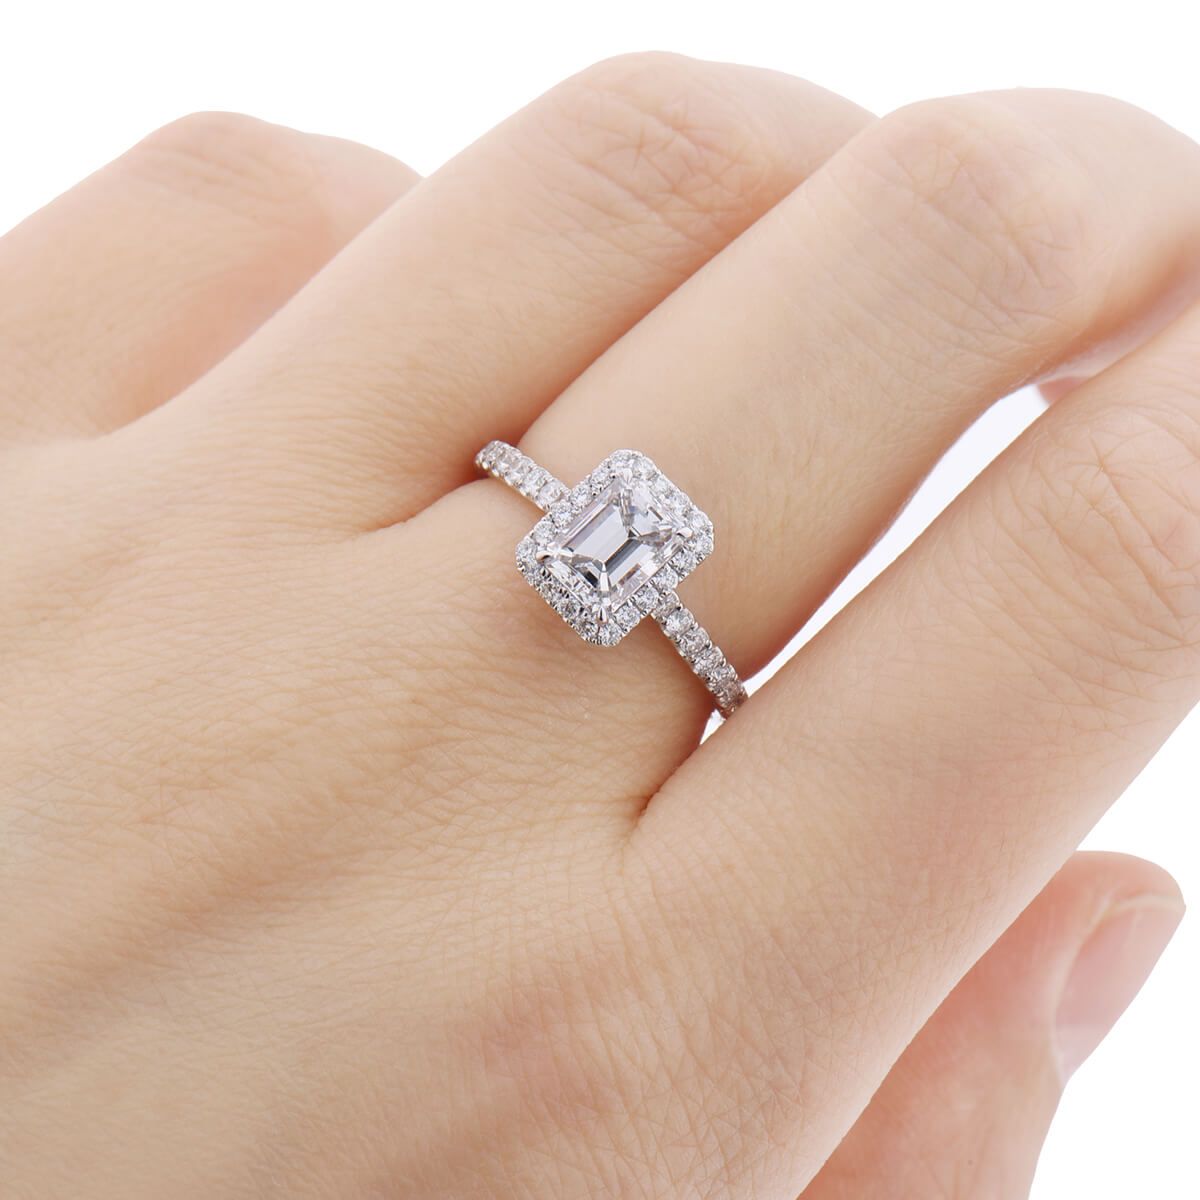  White Diamond Ring, 1.01 Ct. (1.51 Ct. TW), Emerald shape, GIA Certified, 6225859552